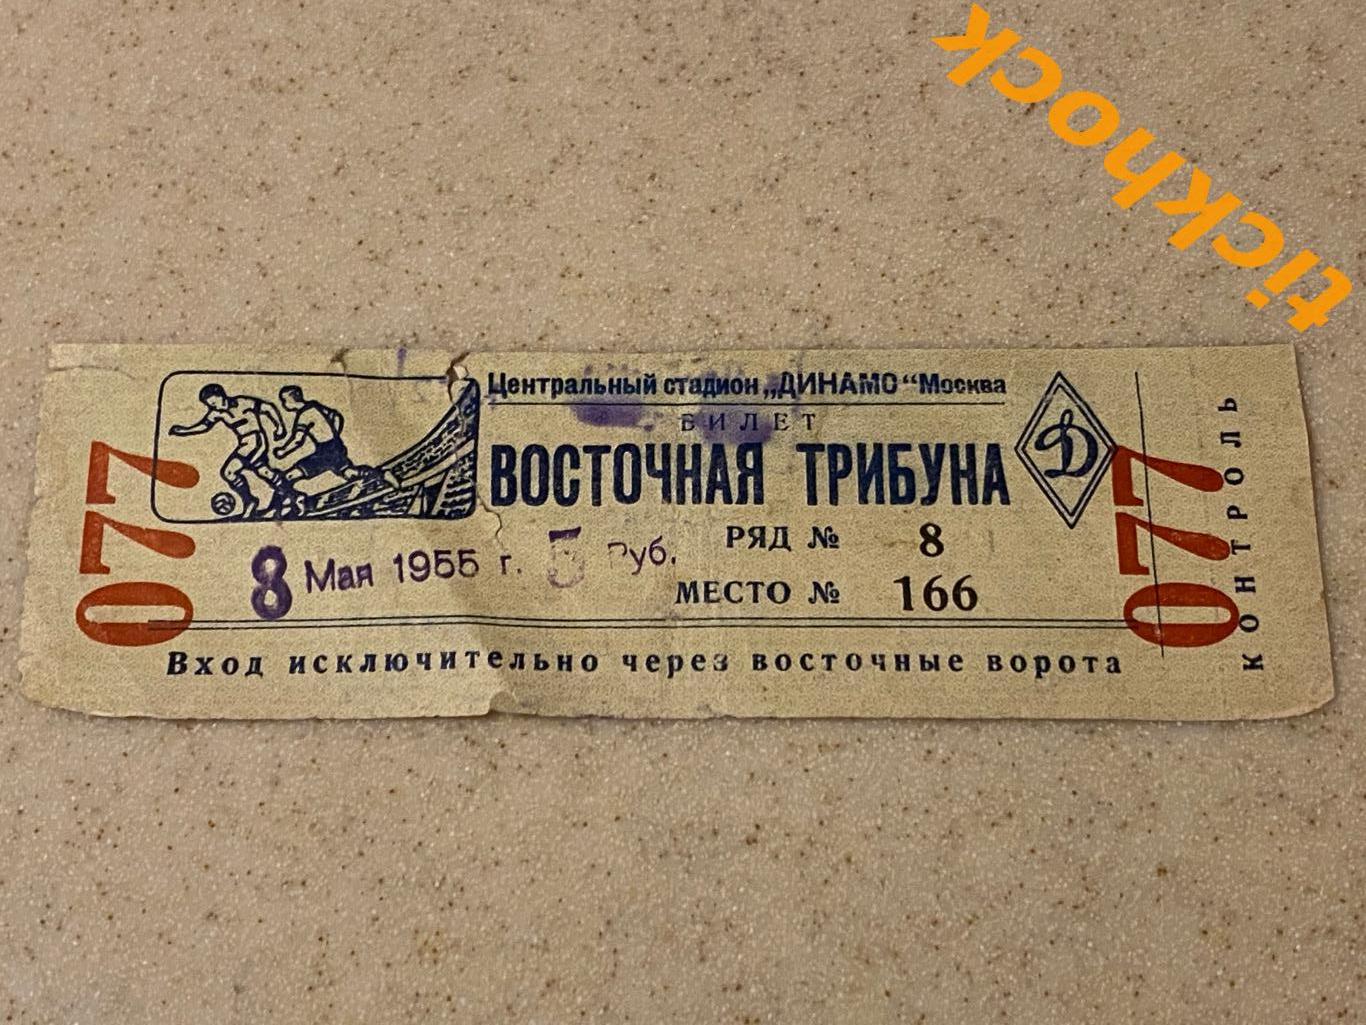 Спартак Москва - ЦДСА / ЦСКА Москва 08.05.1955-- билет -- восточная трибуна